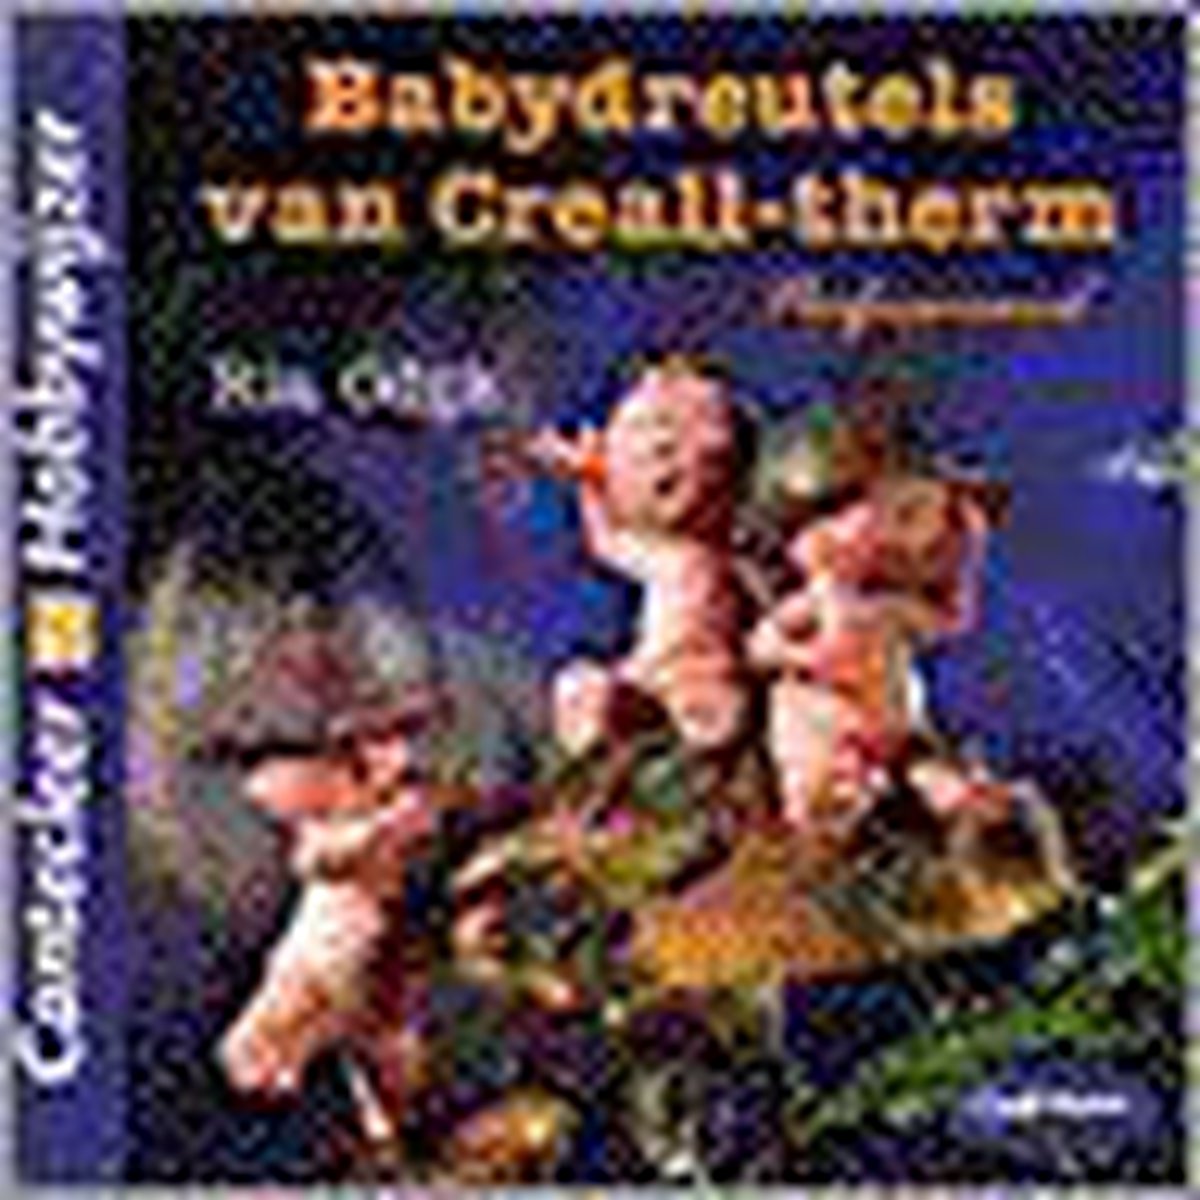 Babydreutels van creall-therm